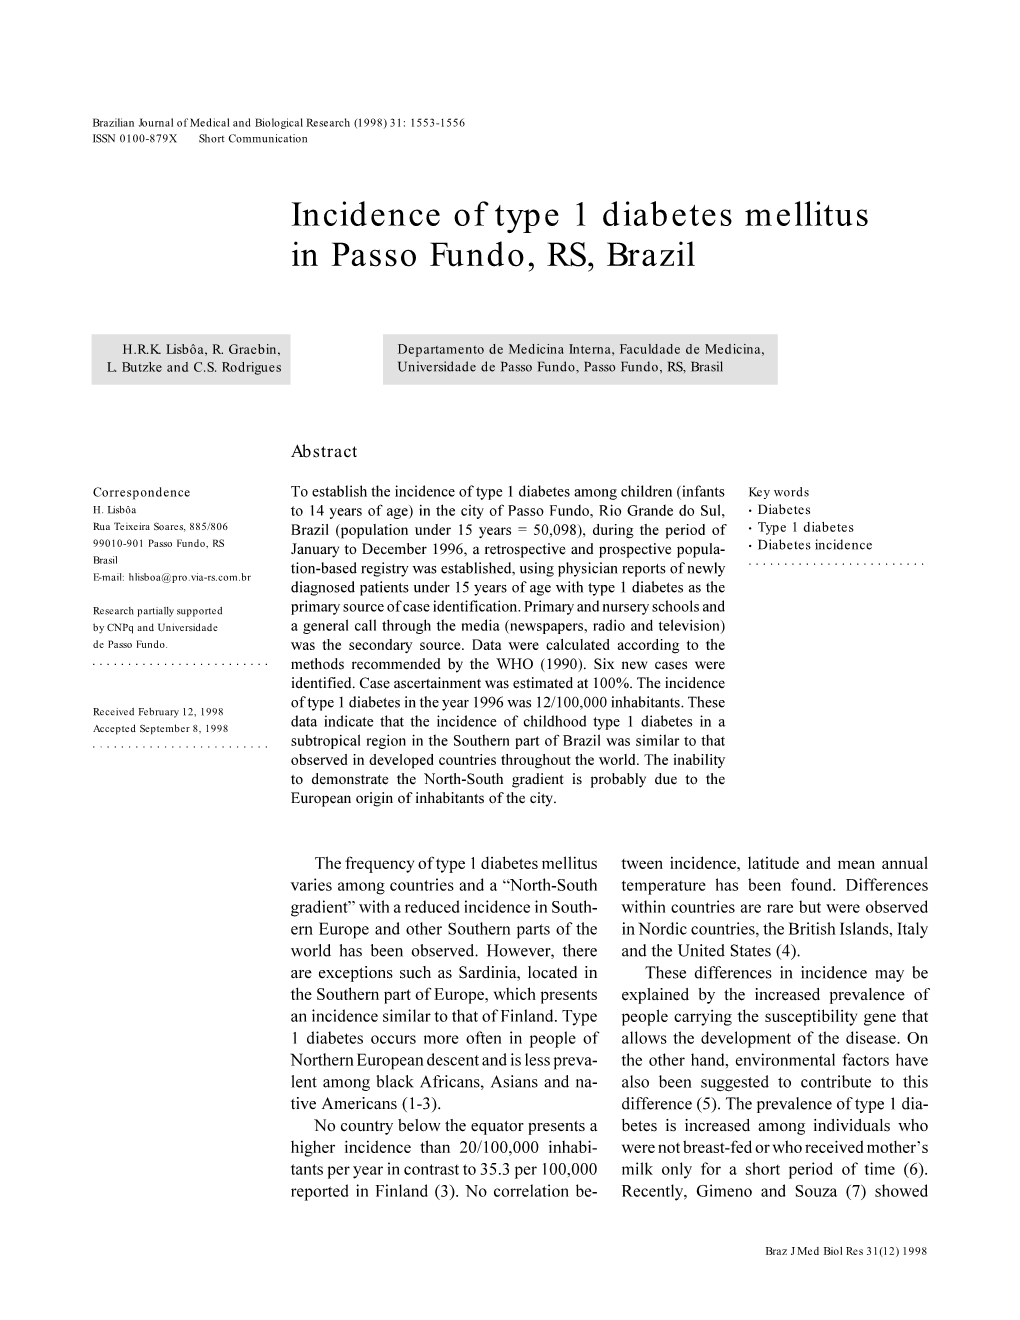 Incidence of Type 1 Diabetes Mellitus in Passo Fundo, RS, Brazil